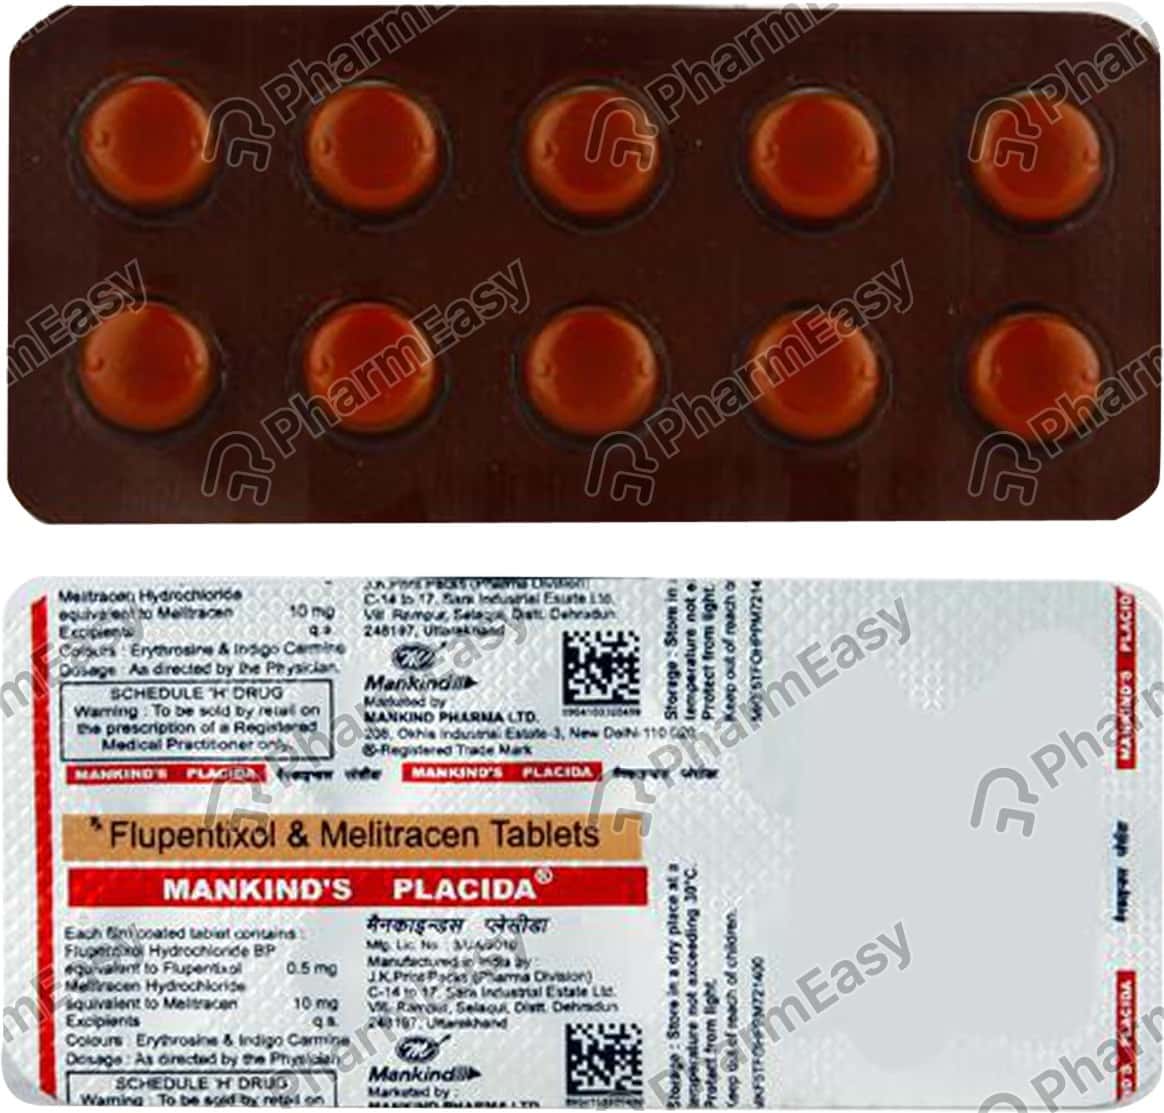 flupentixol hydrochloride tablet uses